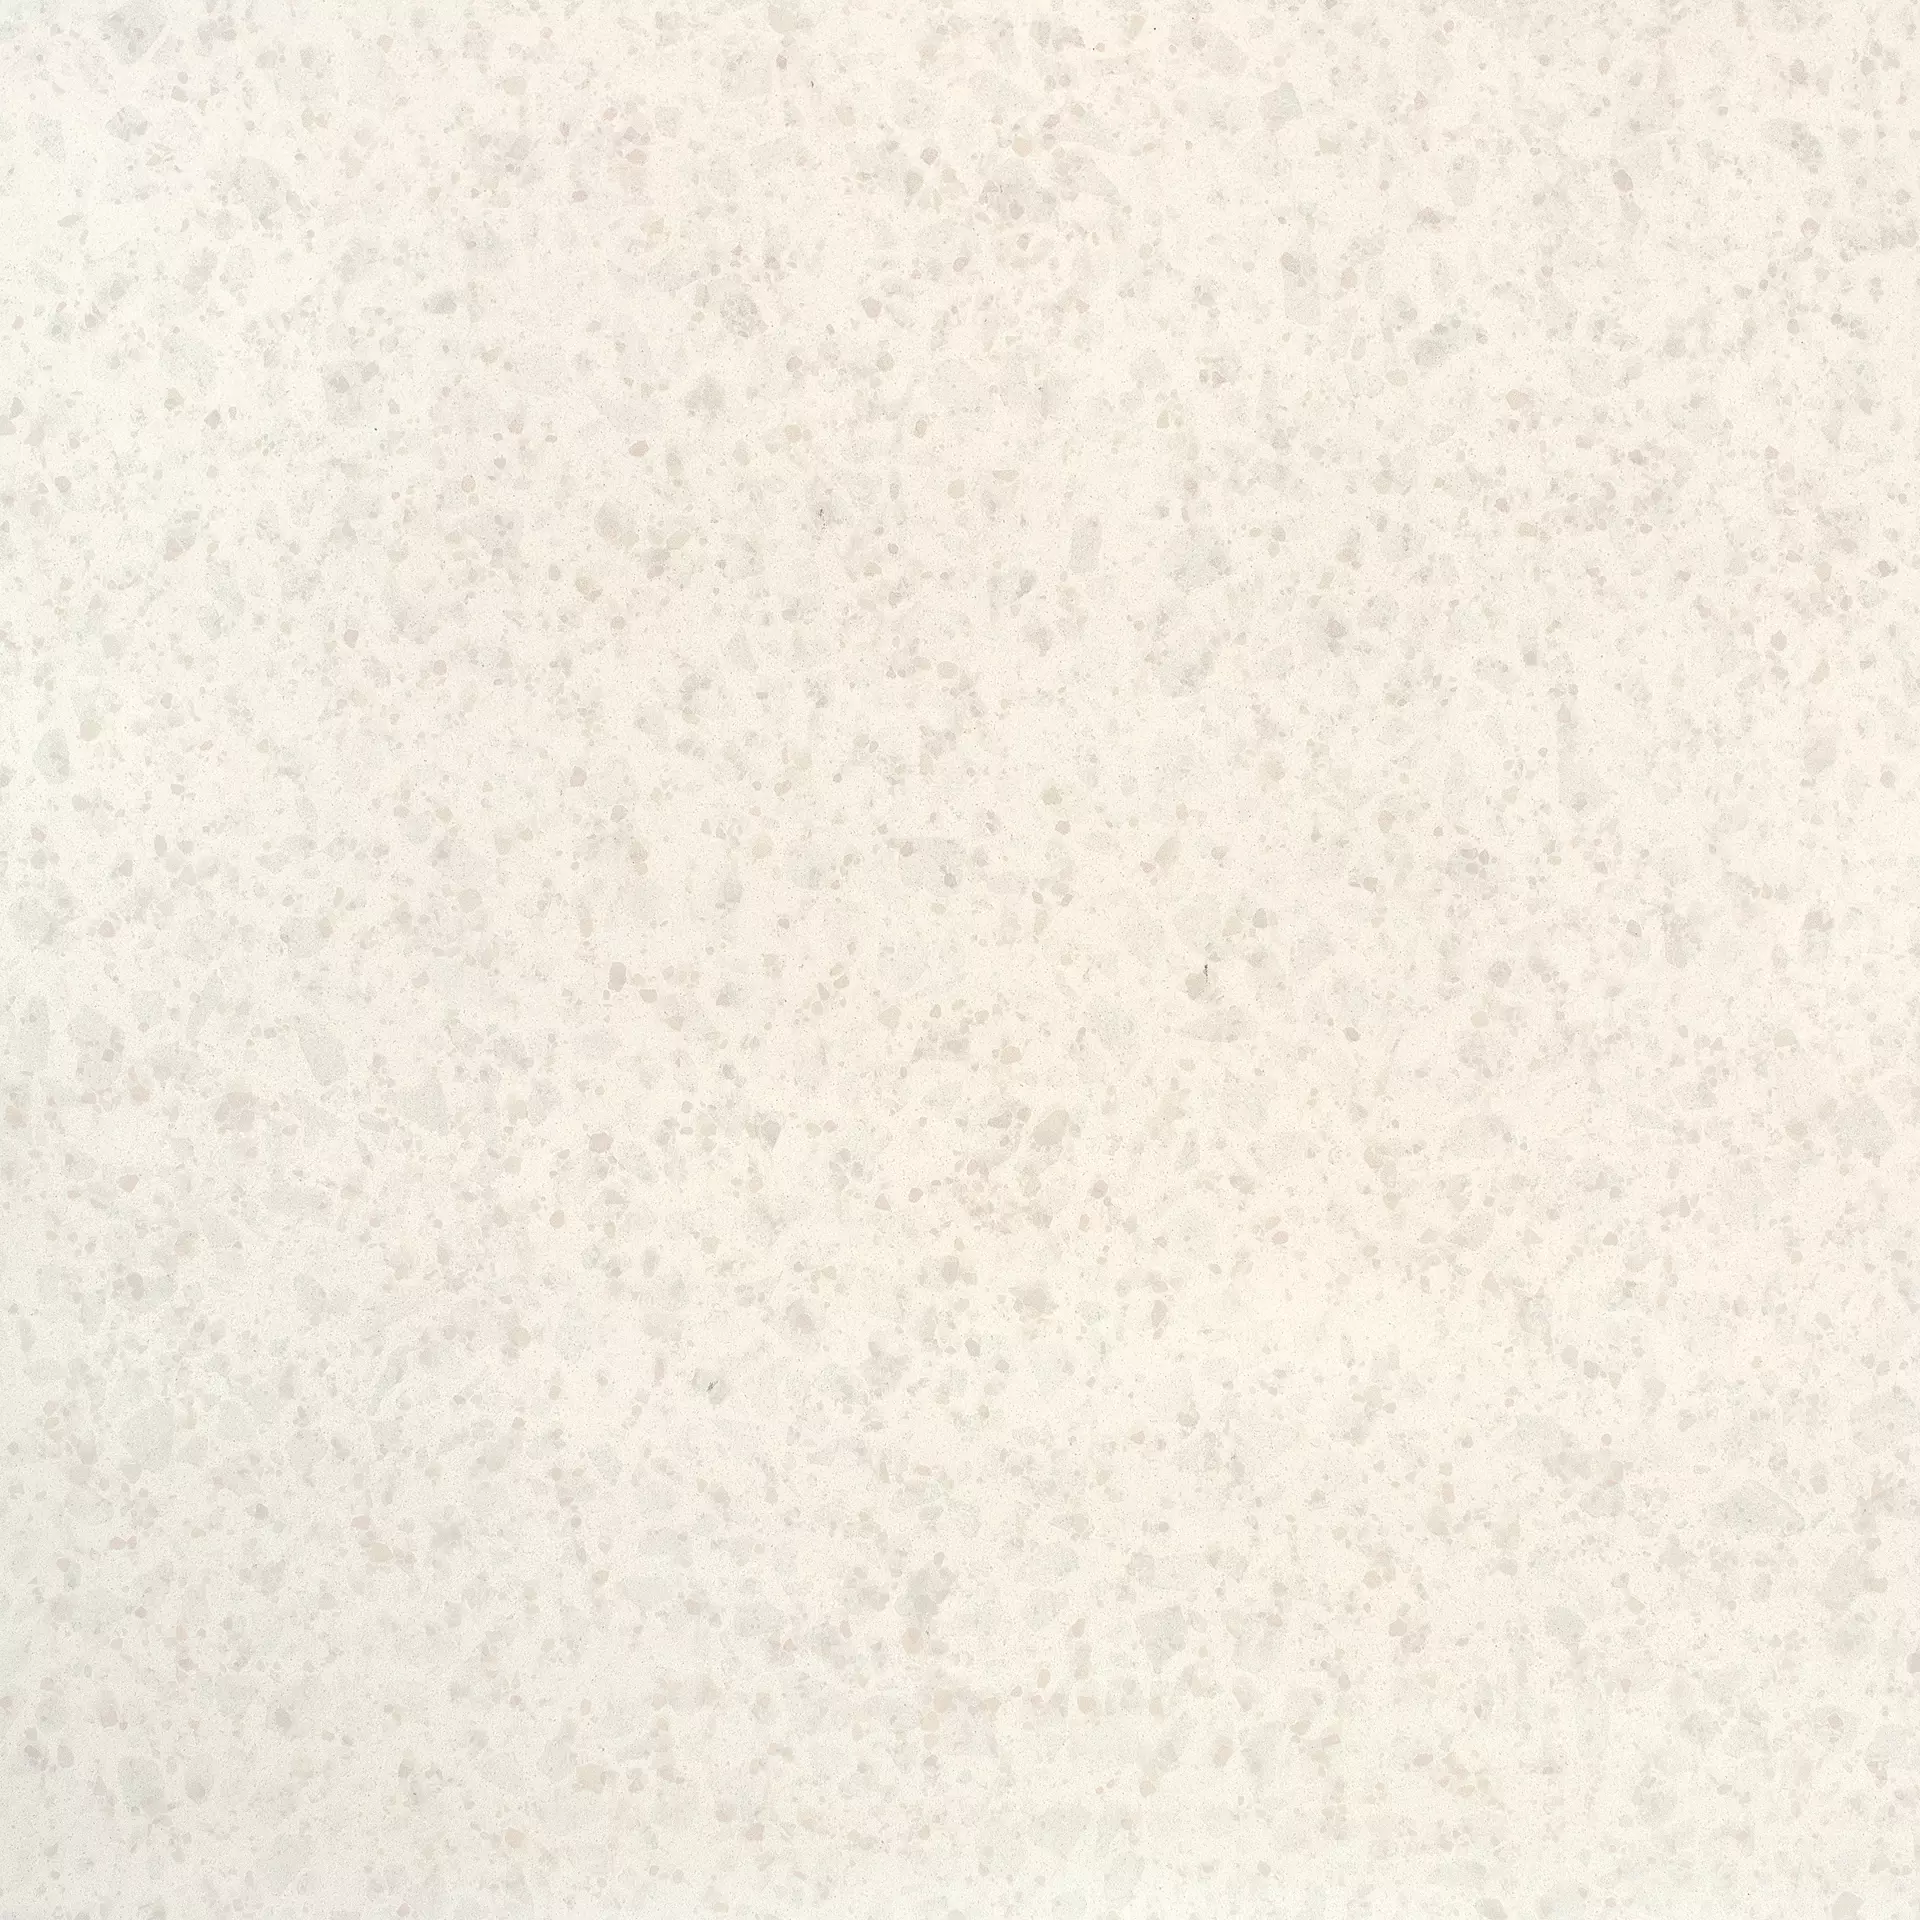 Gigacer Inclusioni Soave Bianco Perla Bocciardato 12INCL120BIAPERBOC 120x120cm 12mm